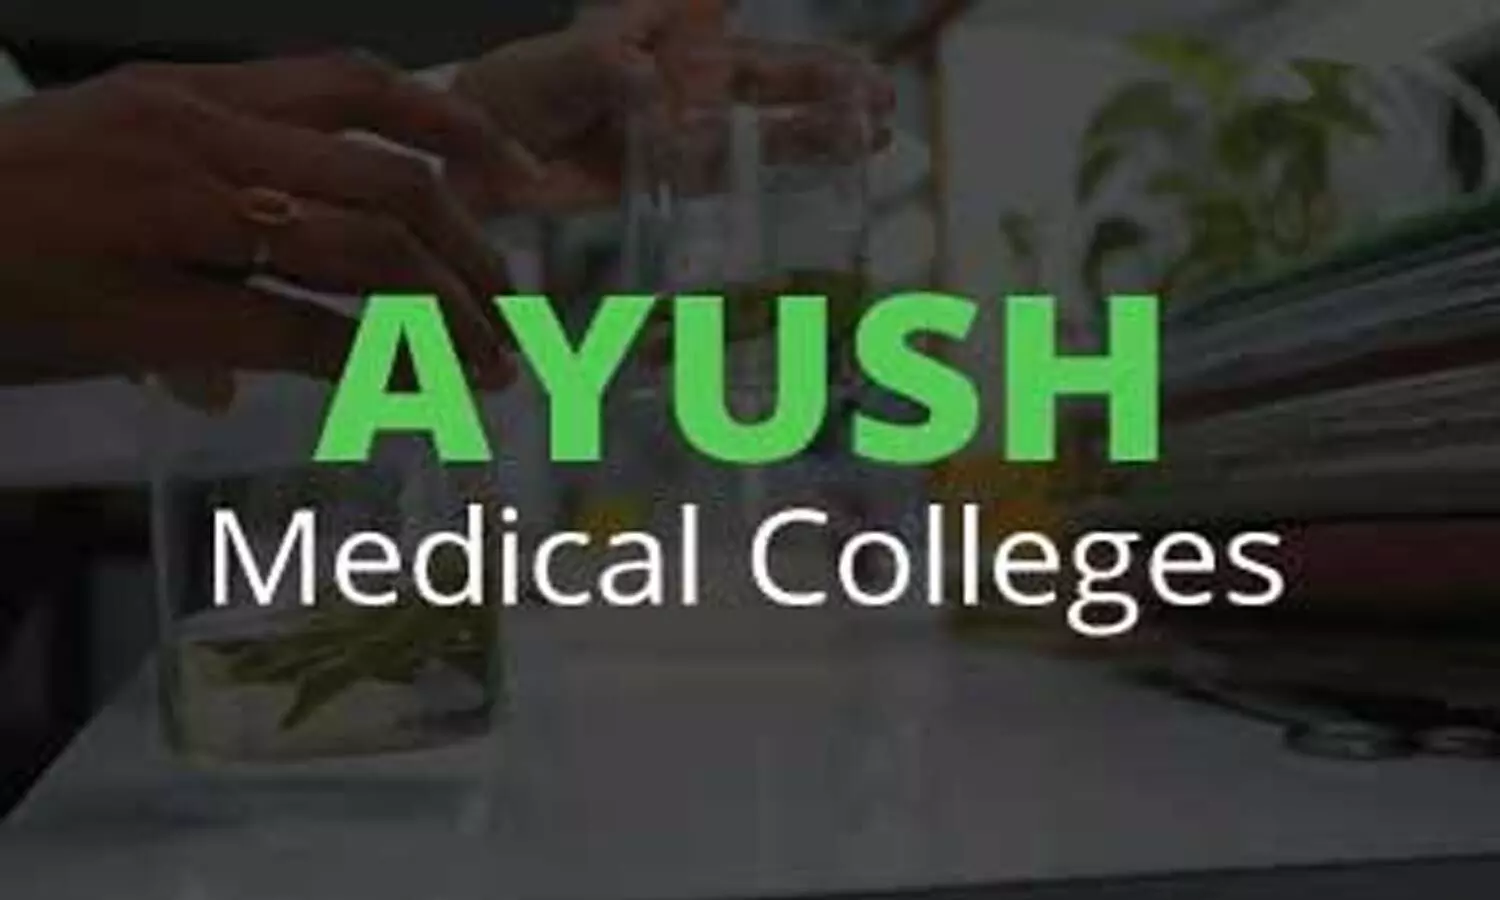 733 AYUSH Colleges in India, maximum in Maharashtra: Dr Harsh Vardhan